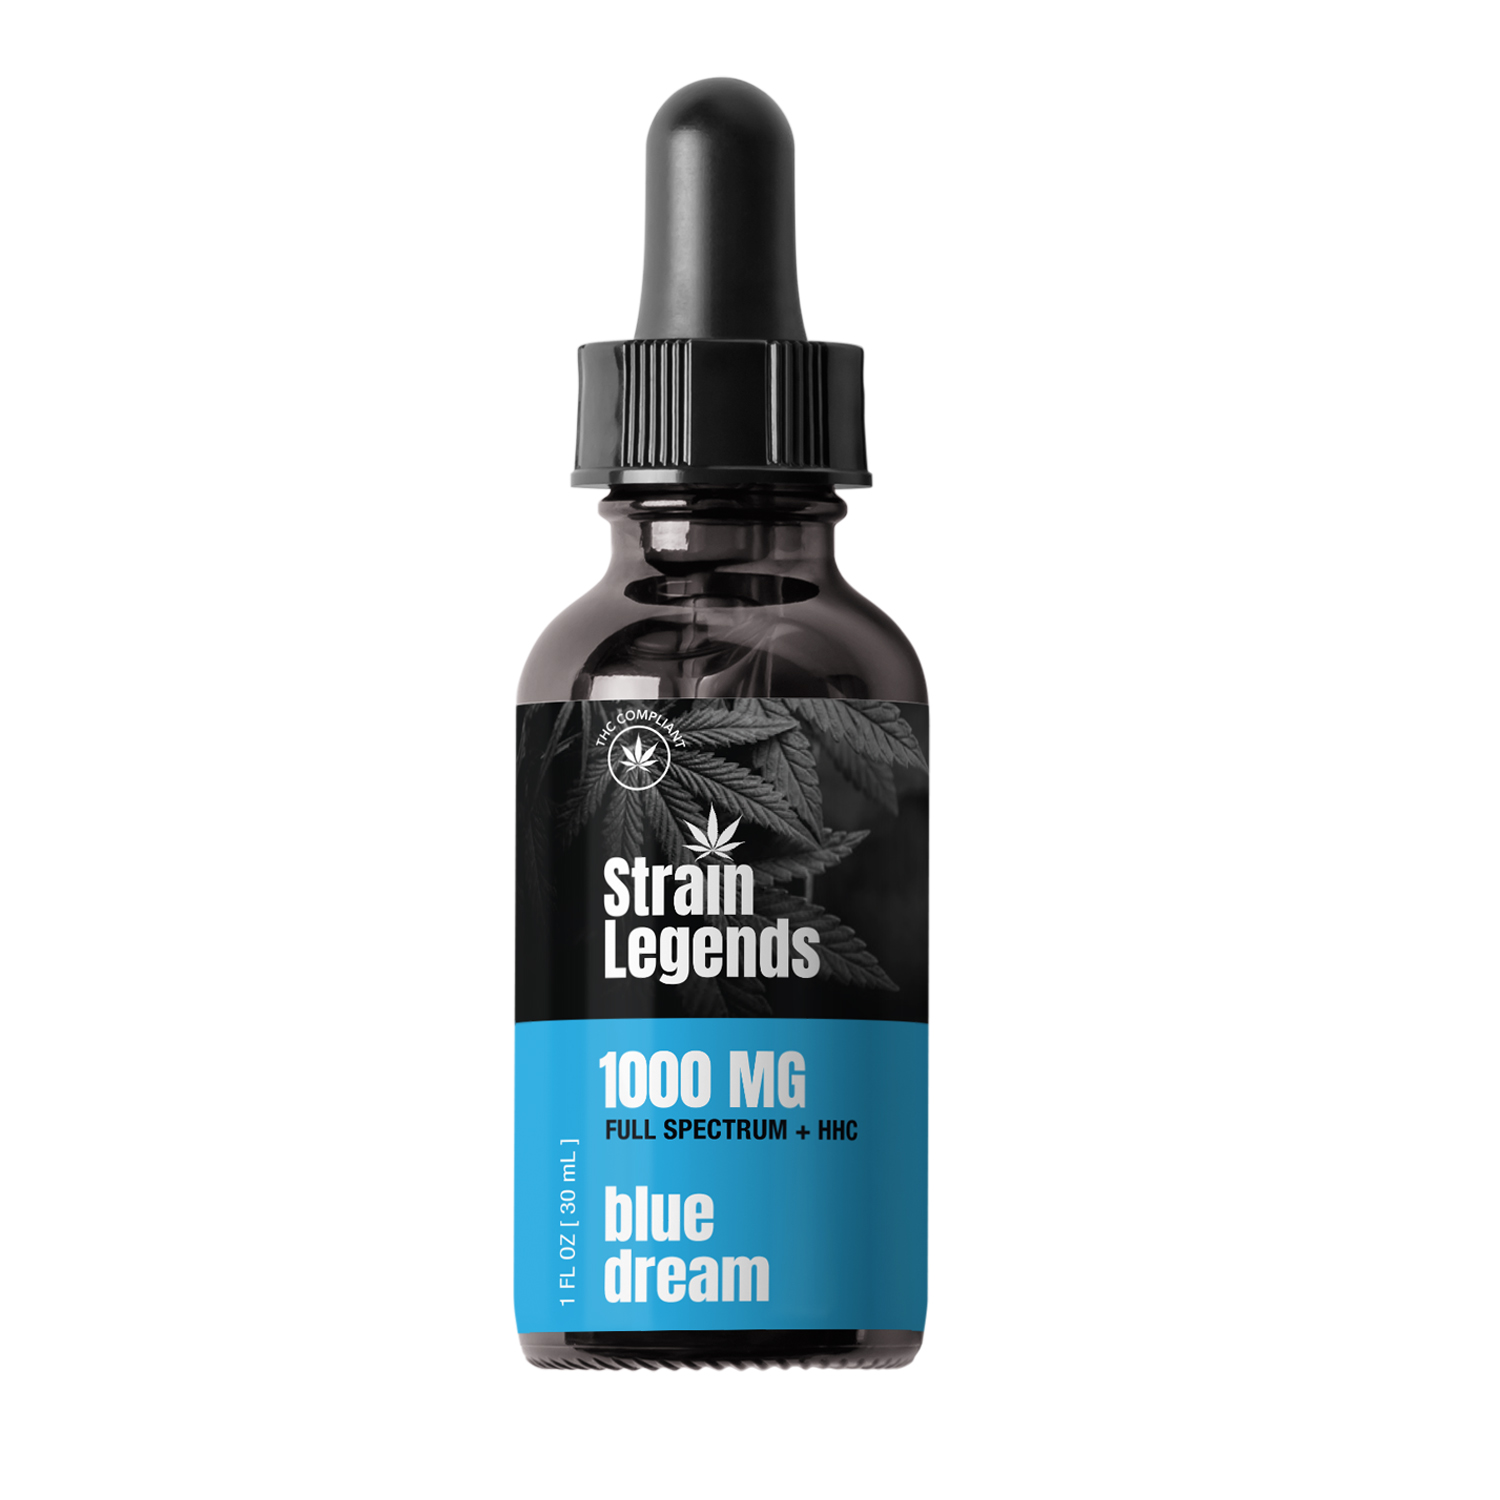 Strain Legends 1000 mg Full Spectrum + HHC Tincture, Blue Dream